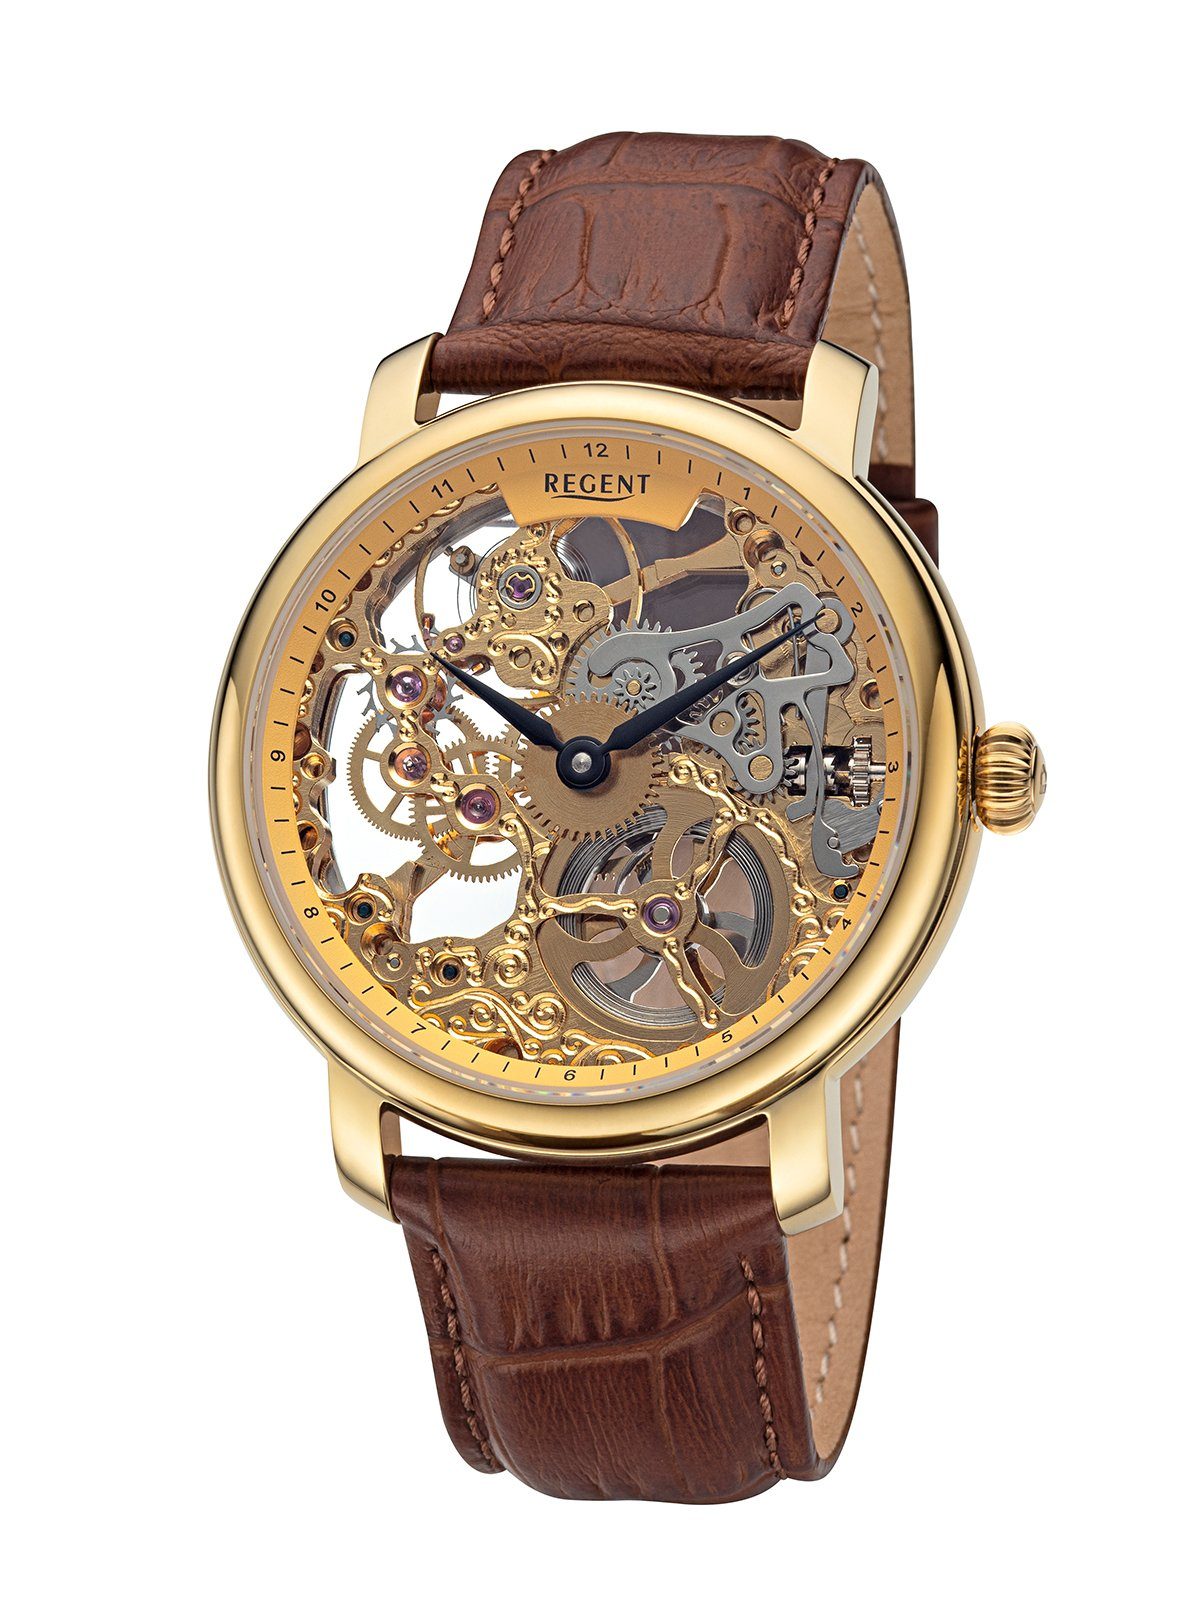 GM-2205, Mechanische Made Regent Skelett-Uhrwerk, Germany gold Lederband Uhr Handaufzug, in